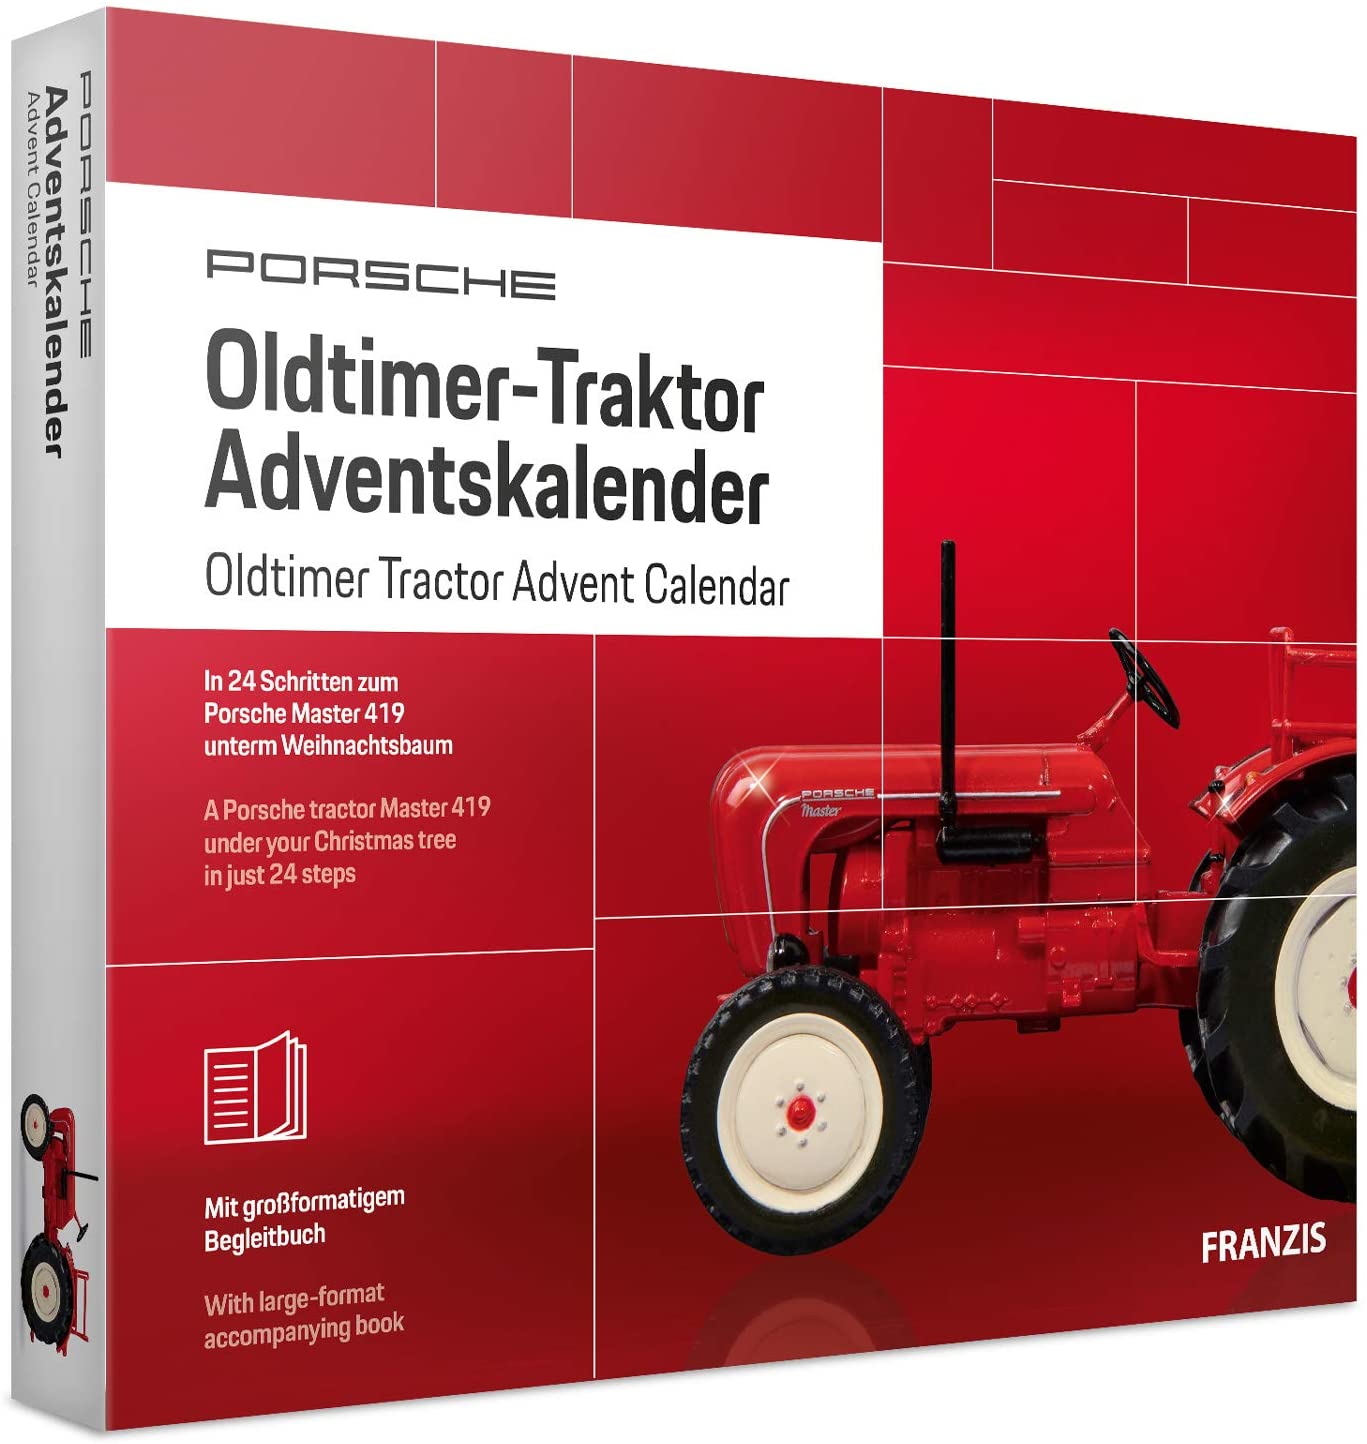 Oldtimer-Traktor-Adventskalender 2021